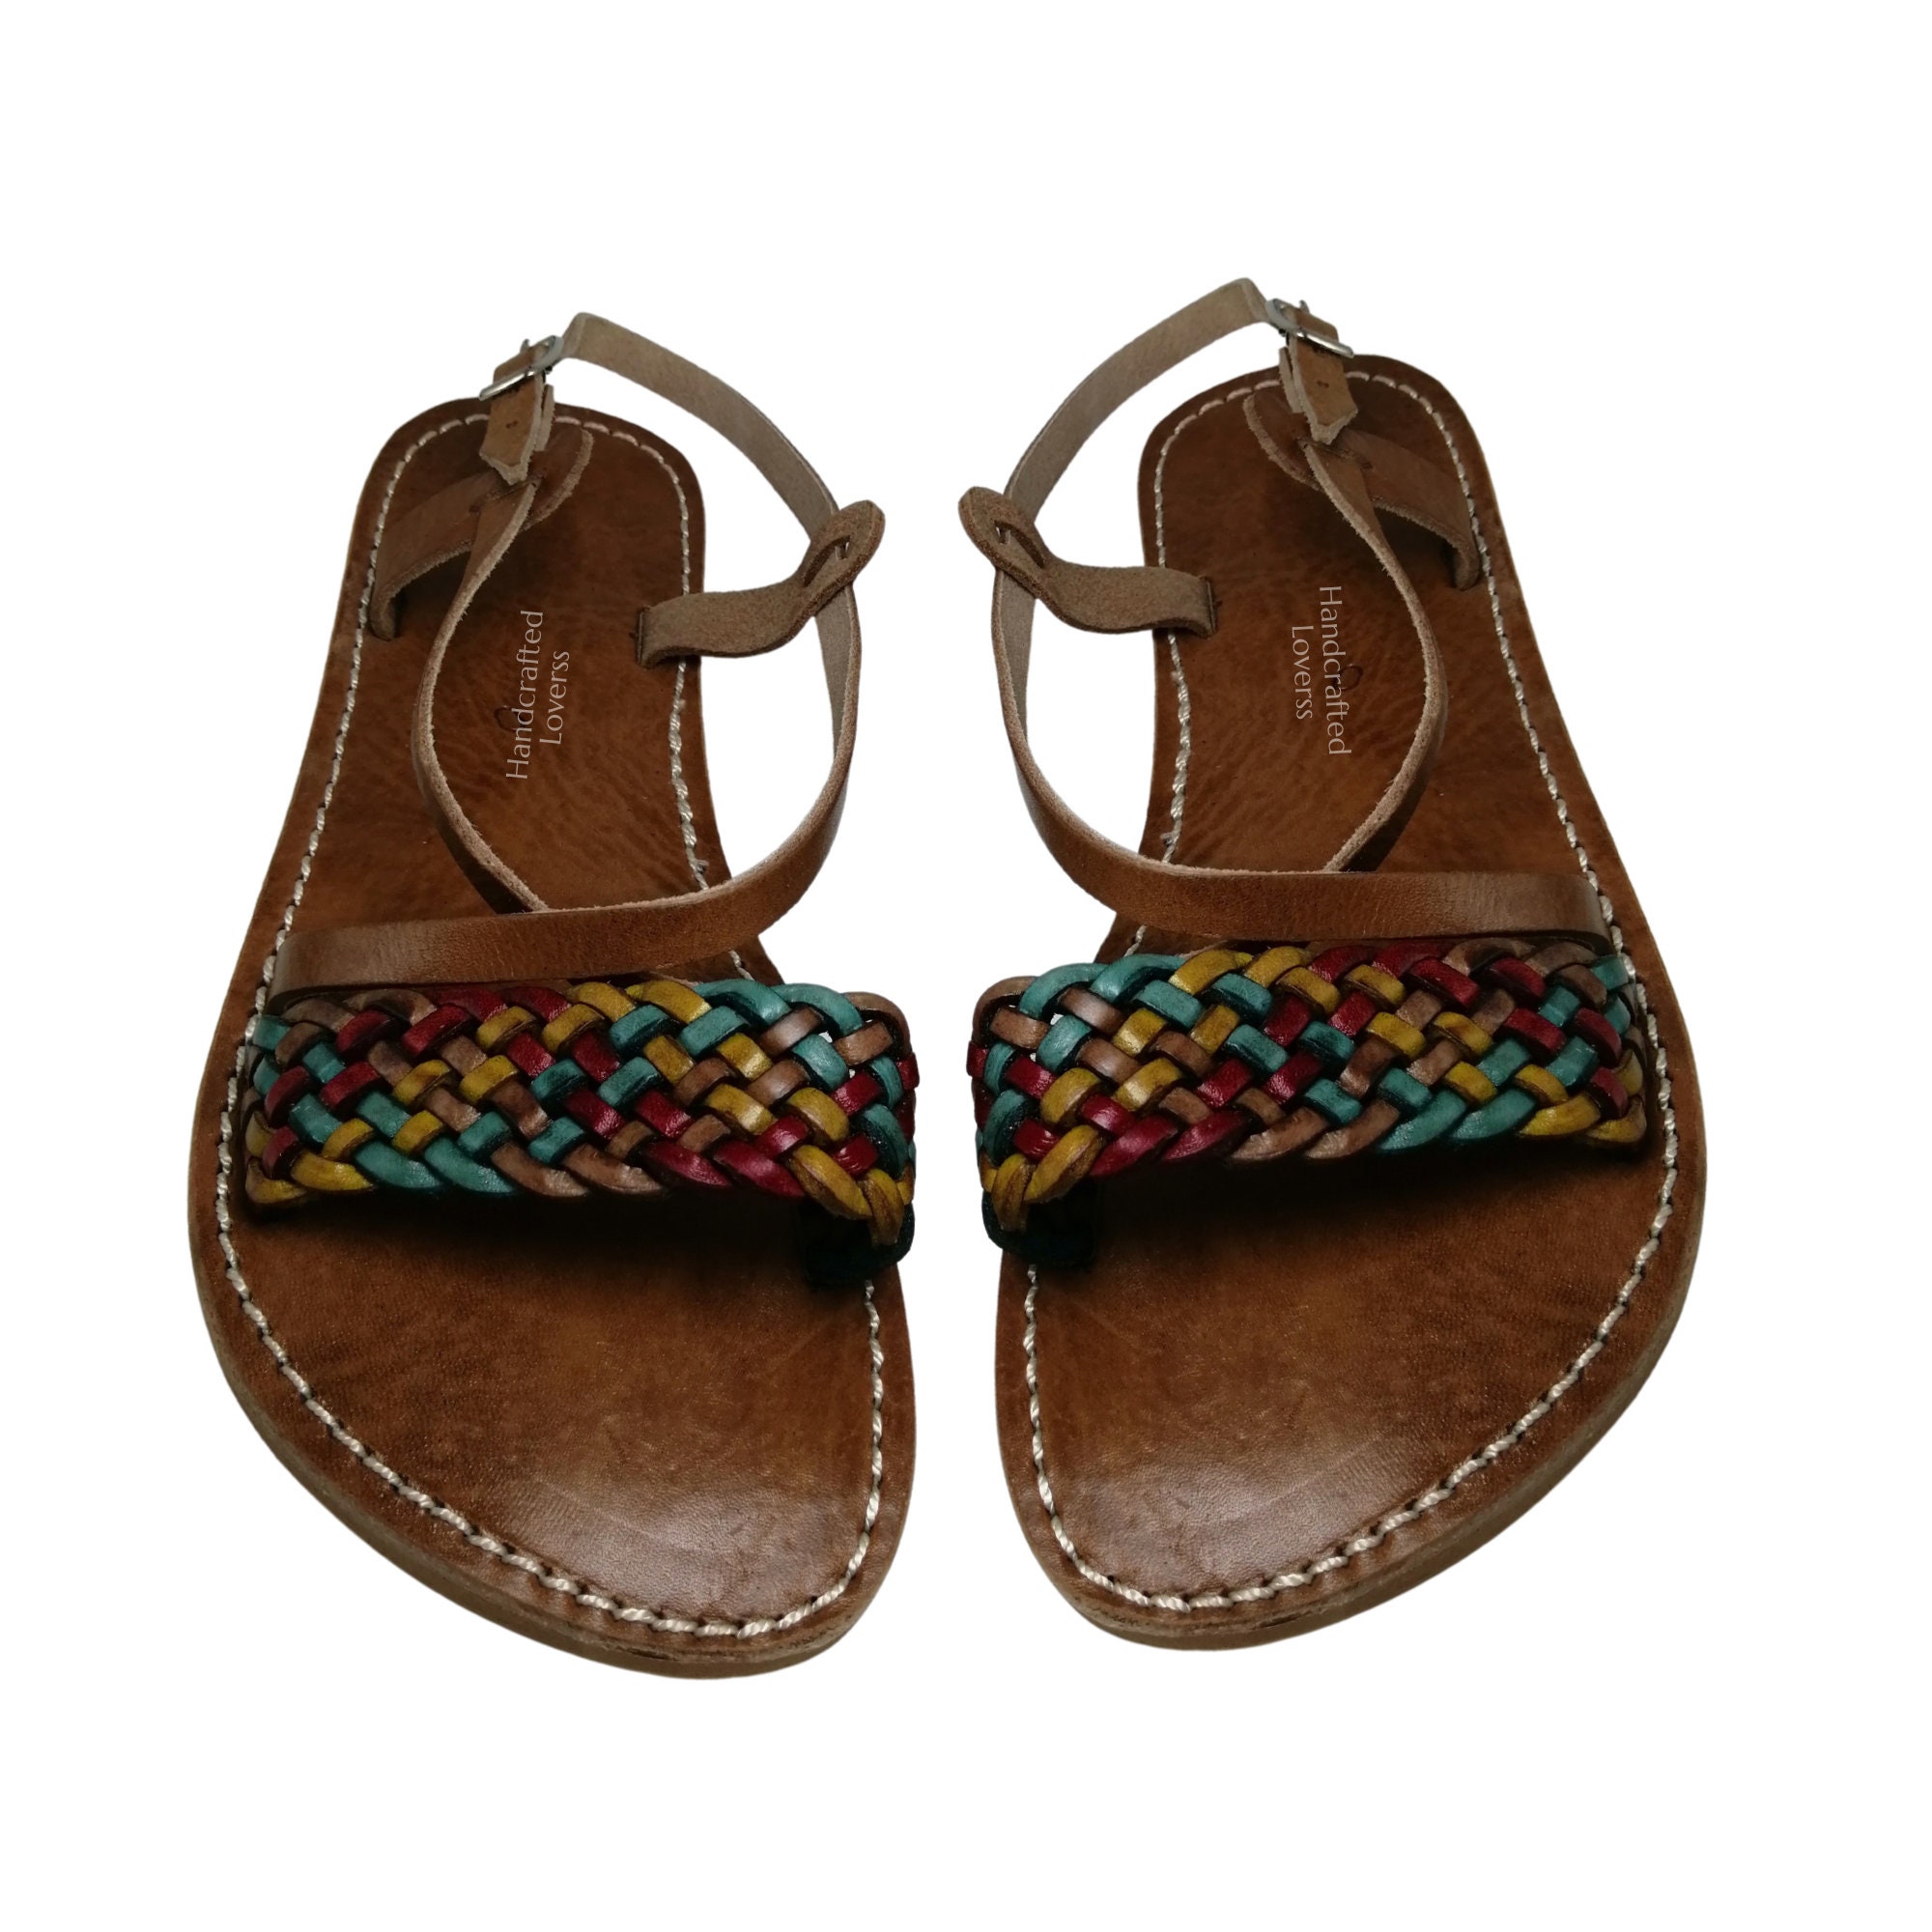 Strappy sandals for women/handmade sandals/handmade | Etsy